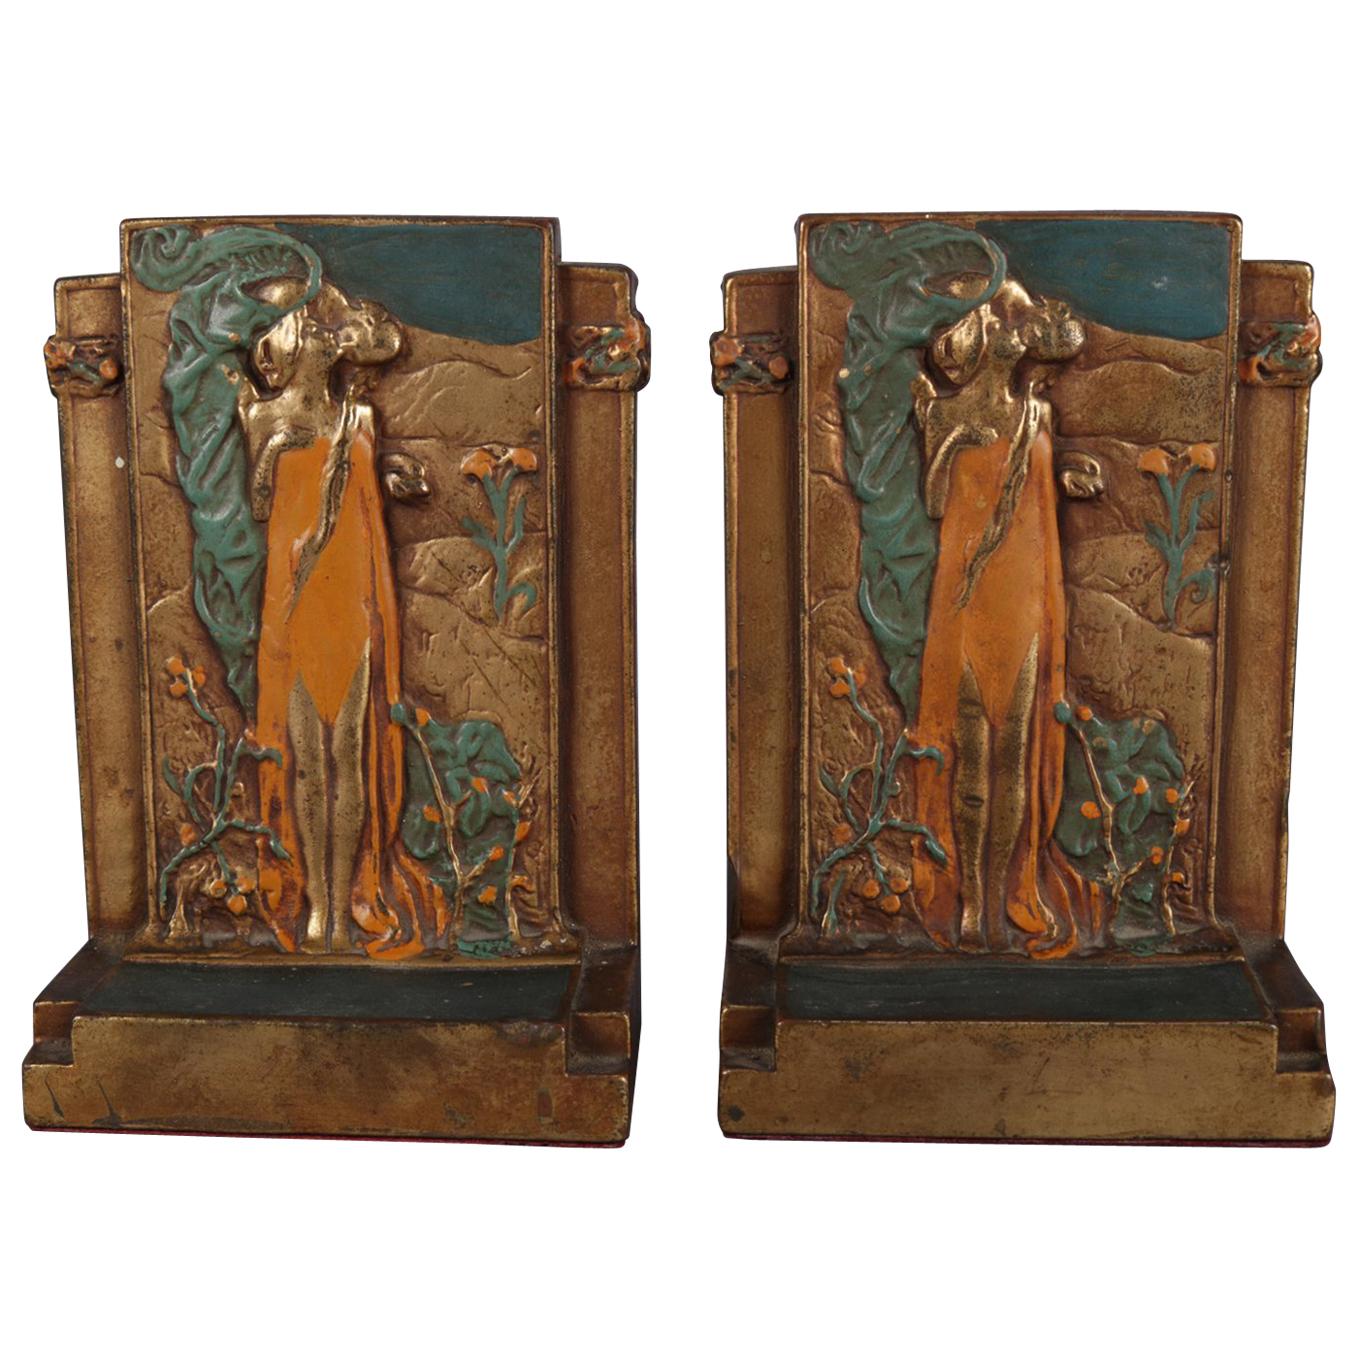 Art Nouveau Polychromed Bronzed Bookends Stylized After Klimt's "The Kiss"